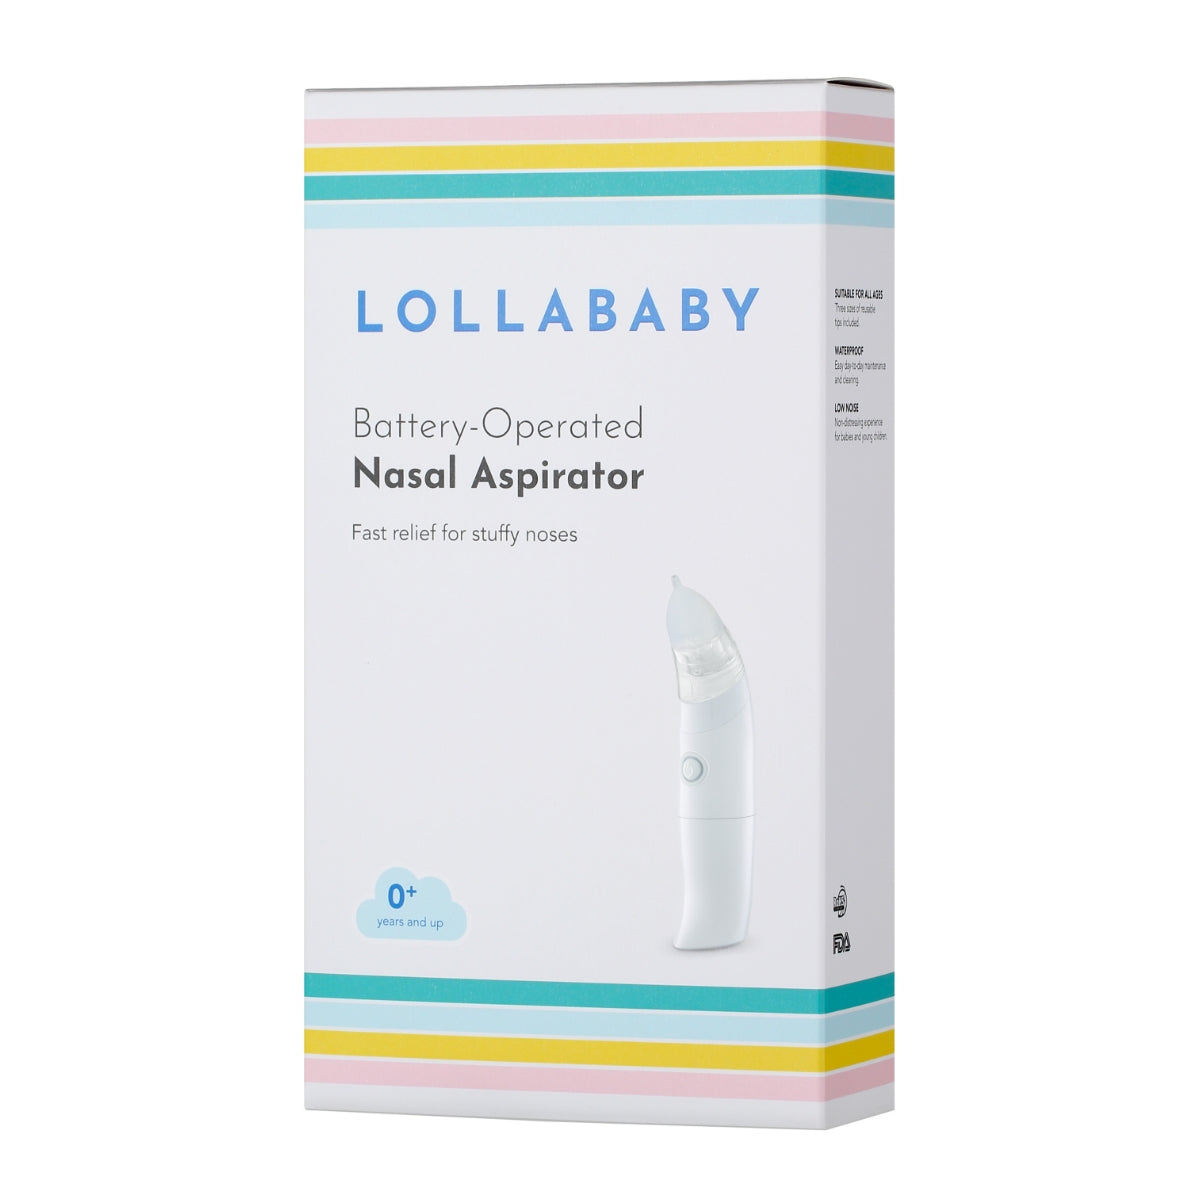 Lollababy Nasal Aspirator